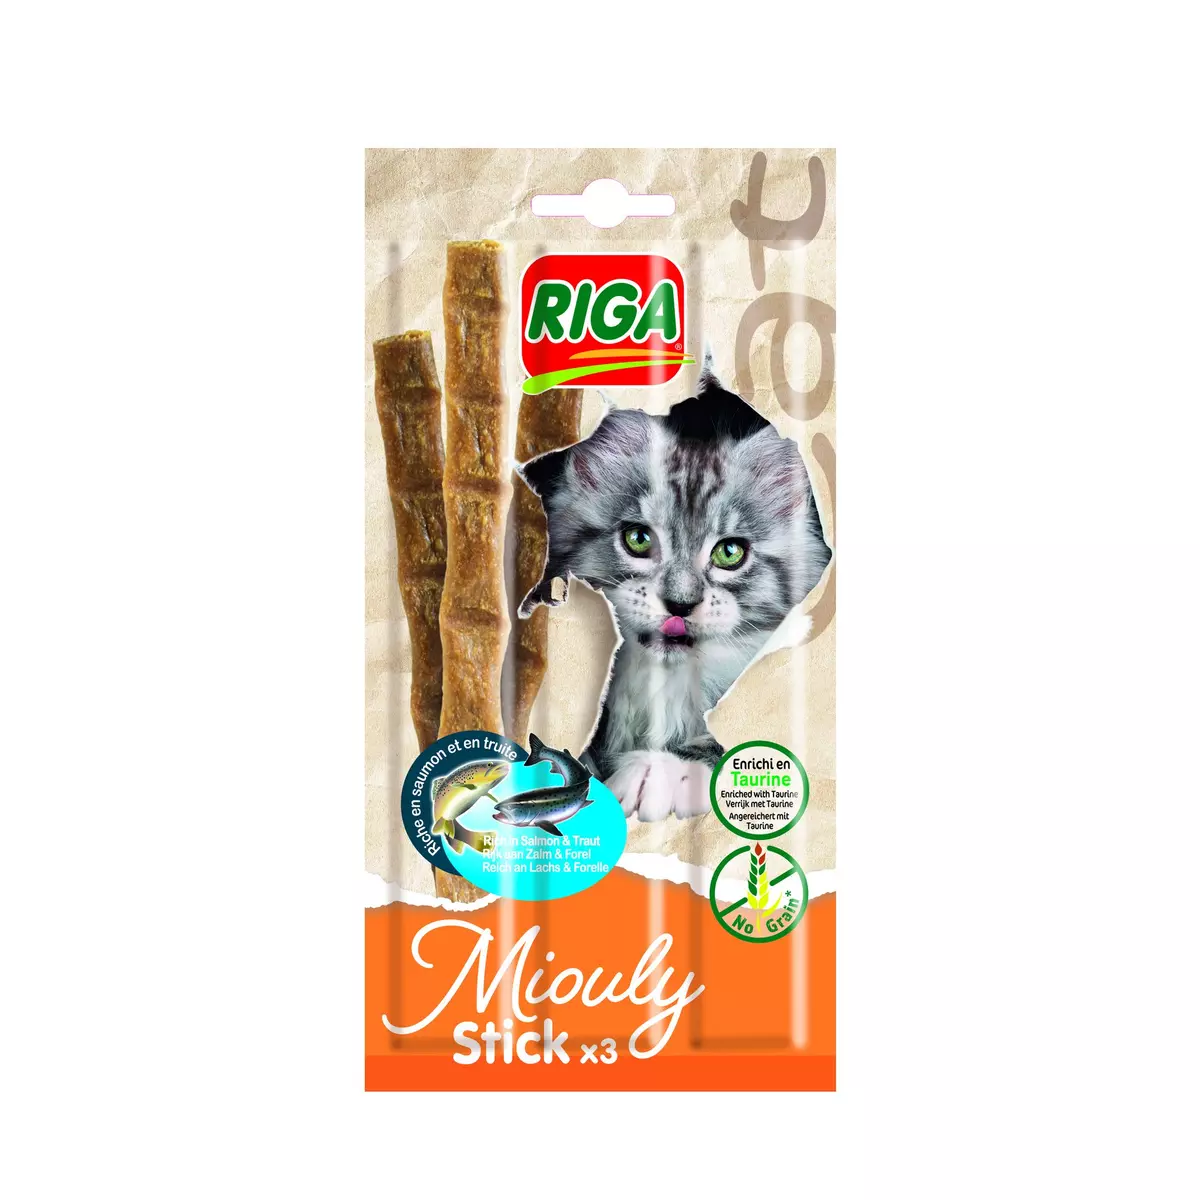 RIGA Stick Miouly saumon et truite pour chat 3 sticks 15g